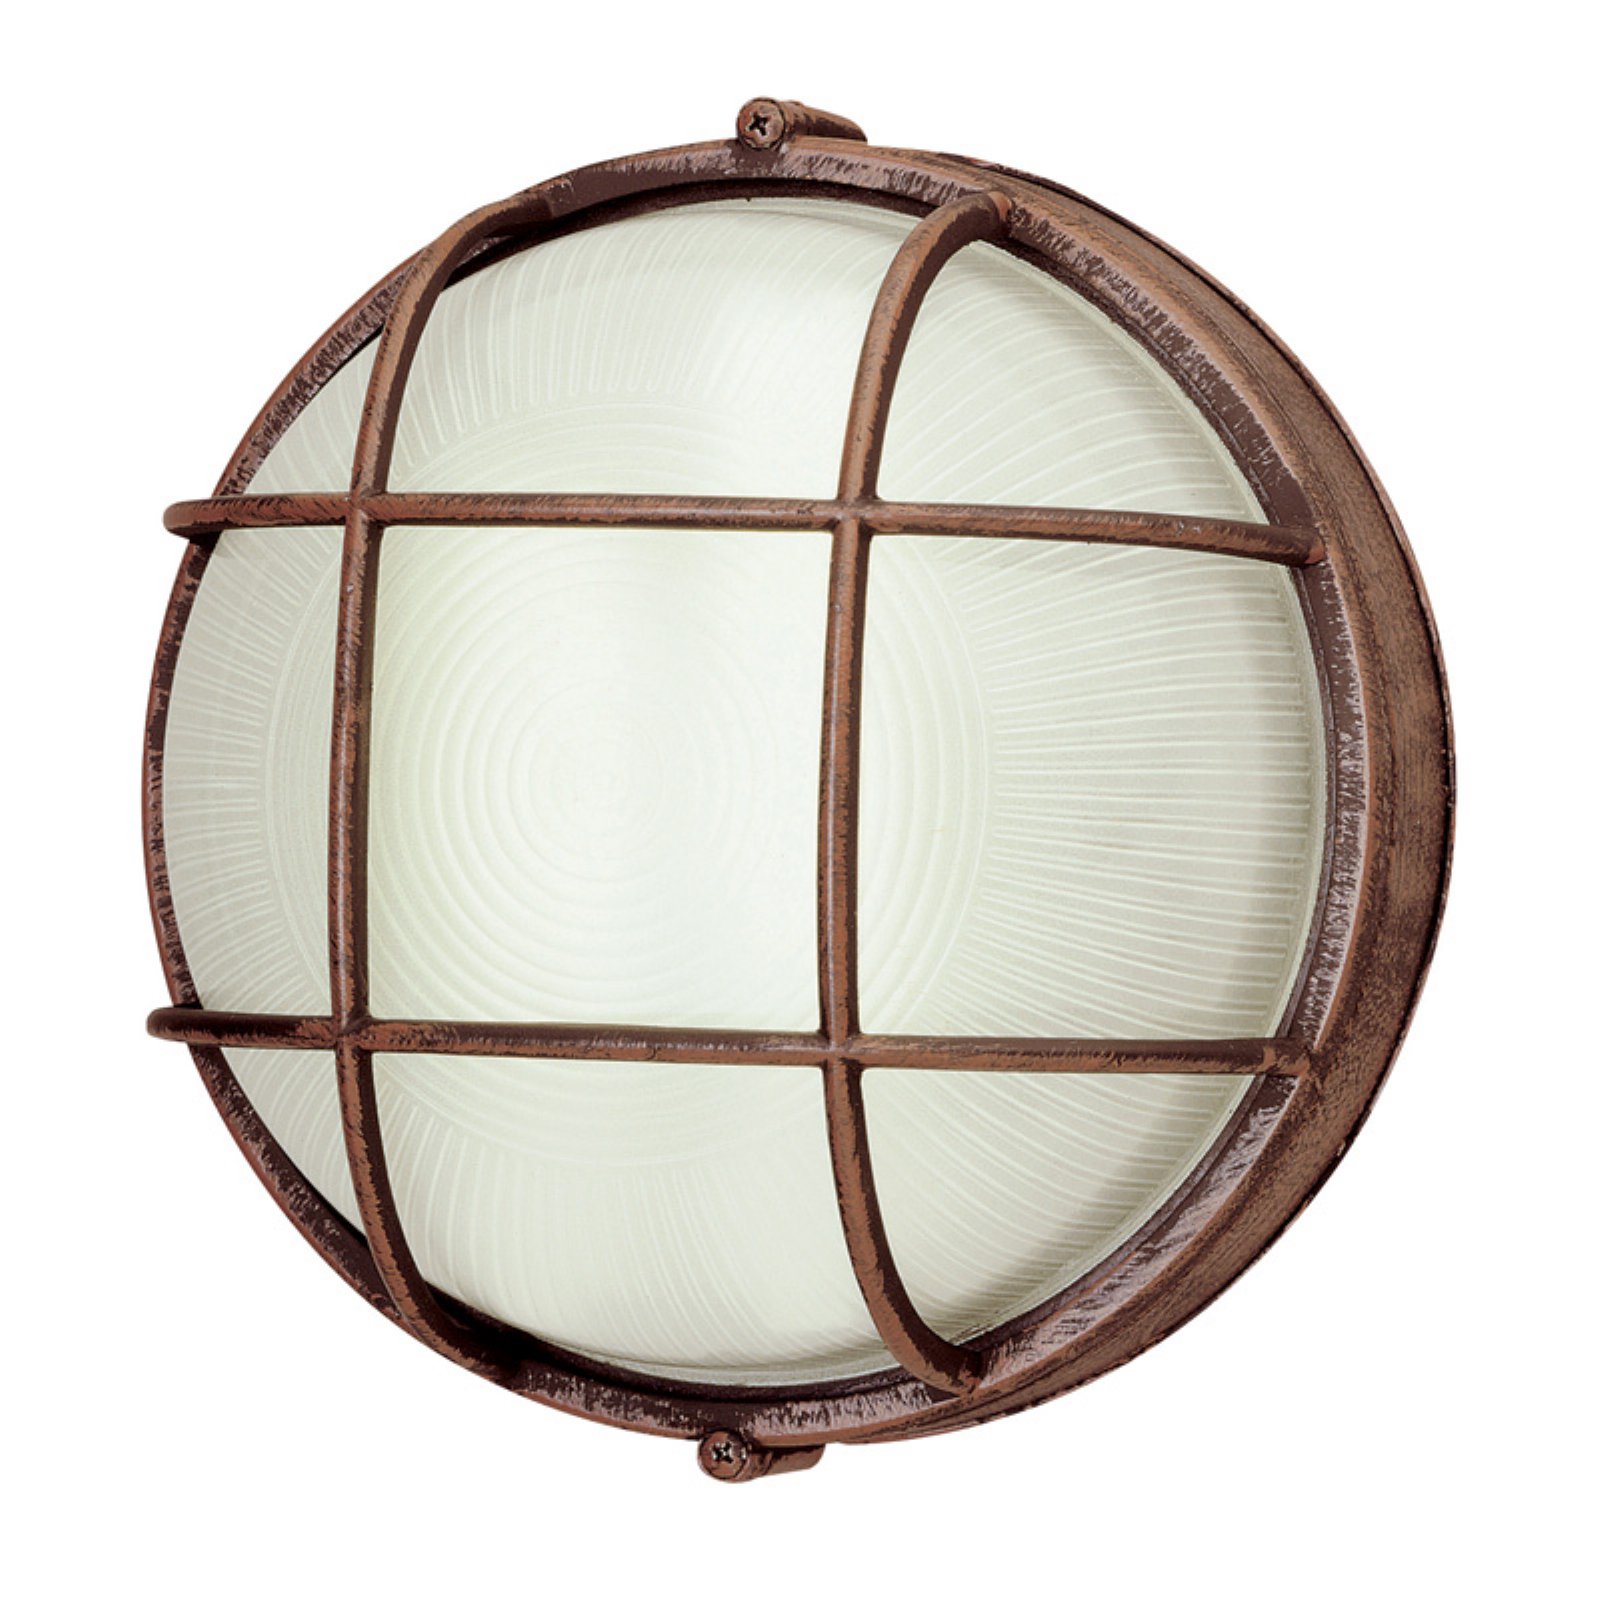 Trans Globe Lighting - The Standard - One Light Medium Bulkhead-Rust Finish - image 1 of 2